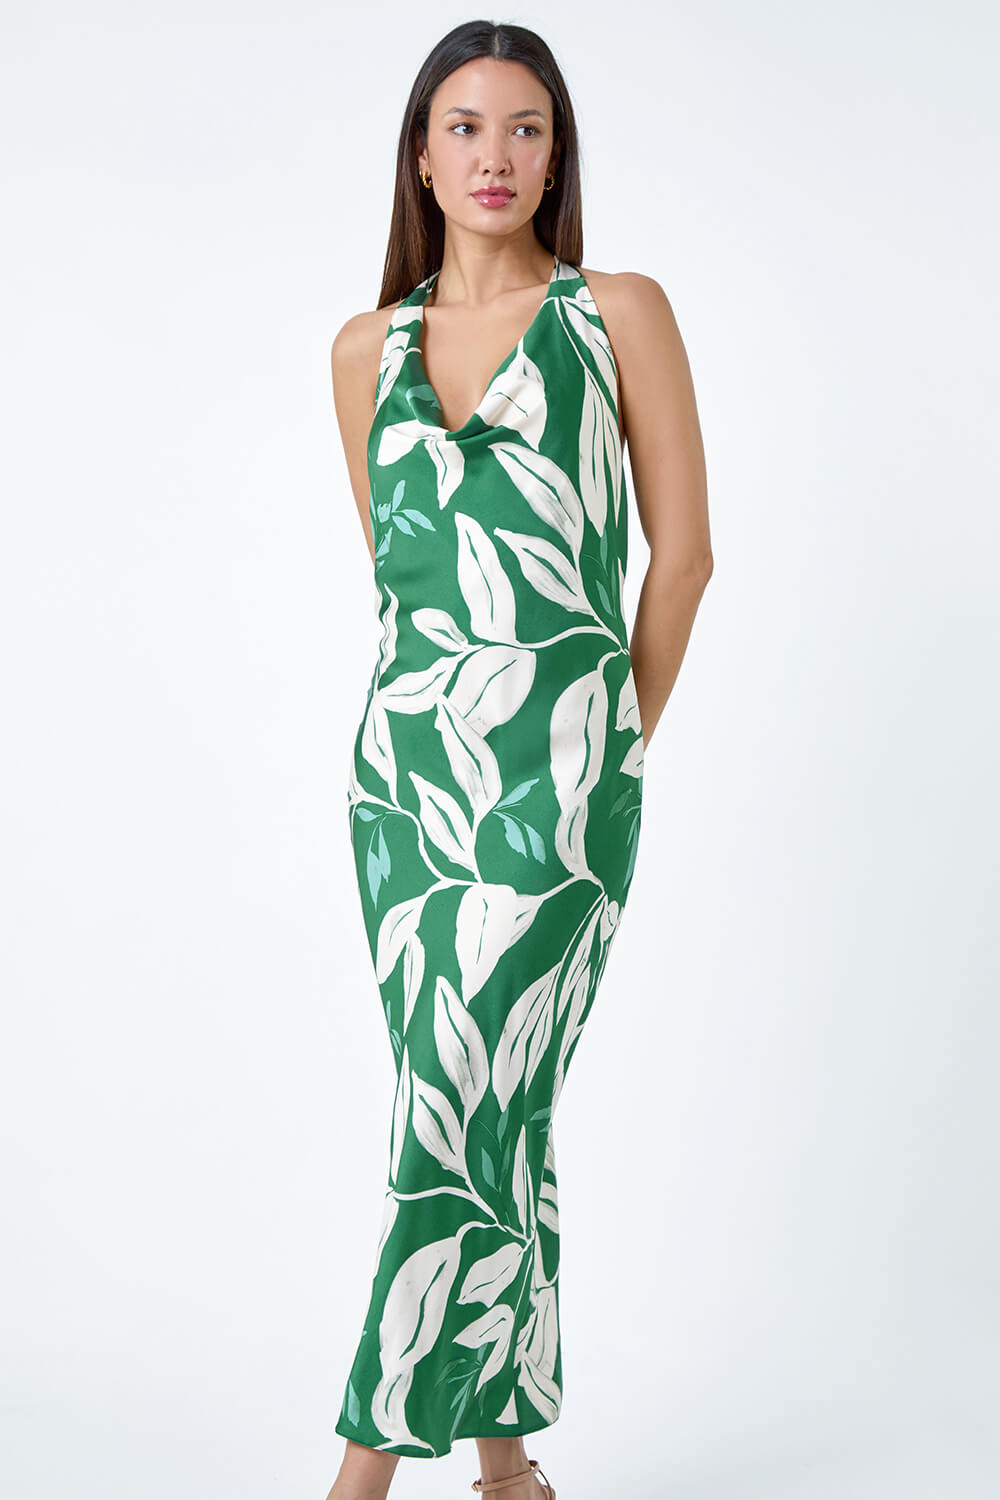 Green Floral Print Satin Bias Cut Dress, Image 2 of 5